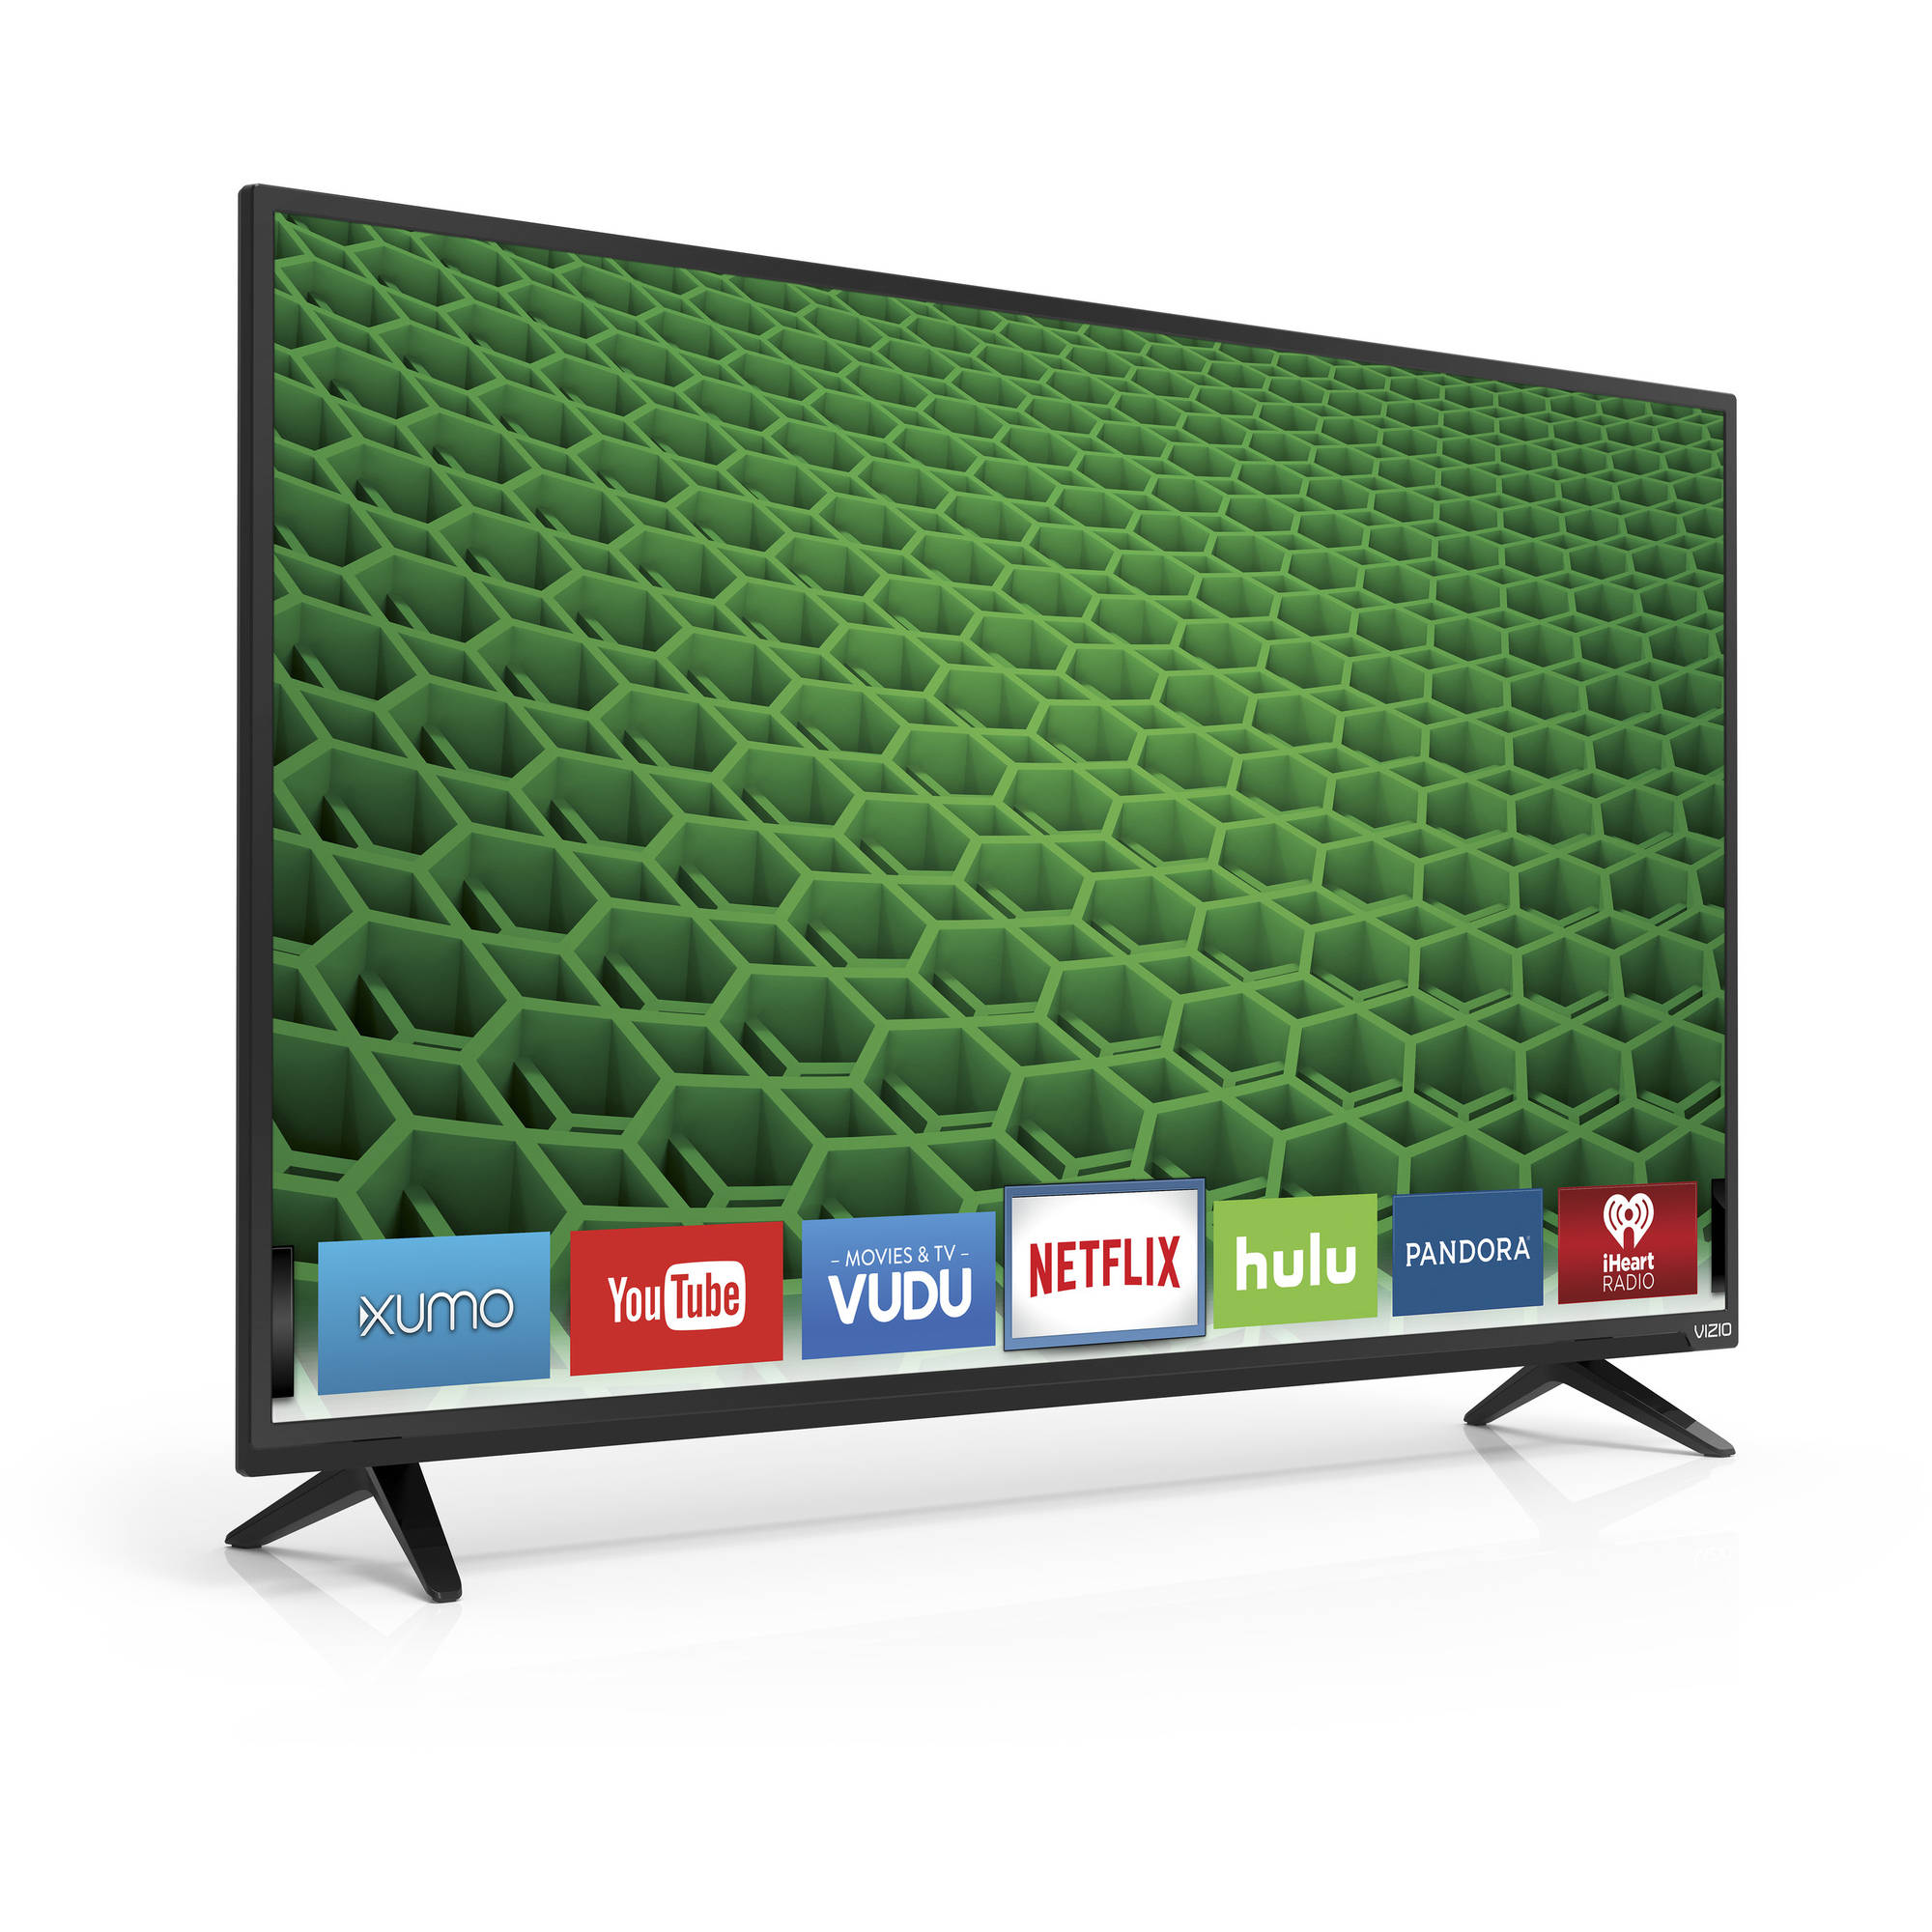 VIZIO 48" Class FHD (1080P) Smart LED TV (D48f-E0) - image 3 of 14